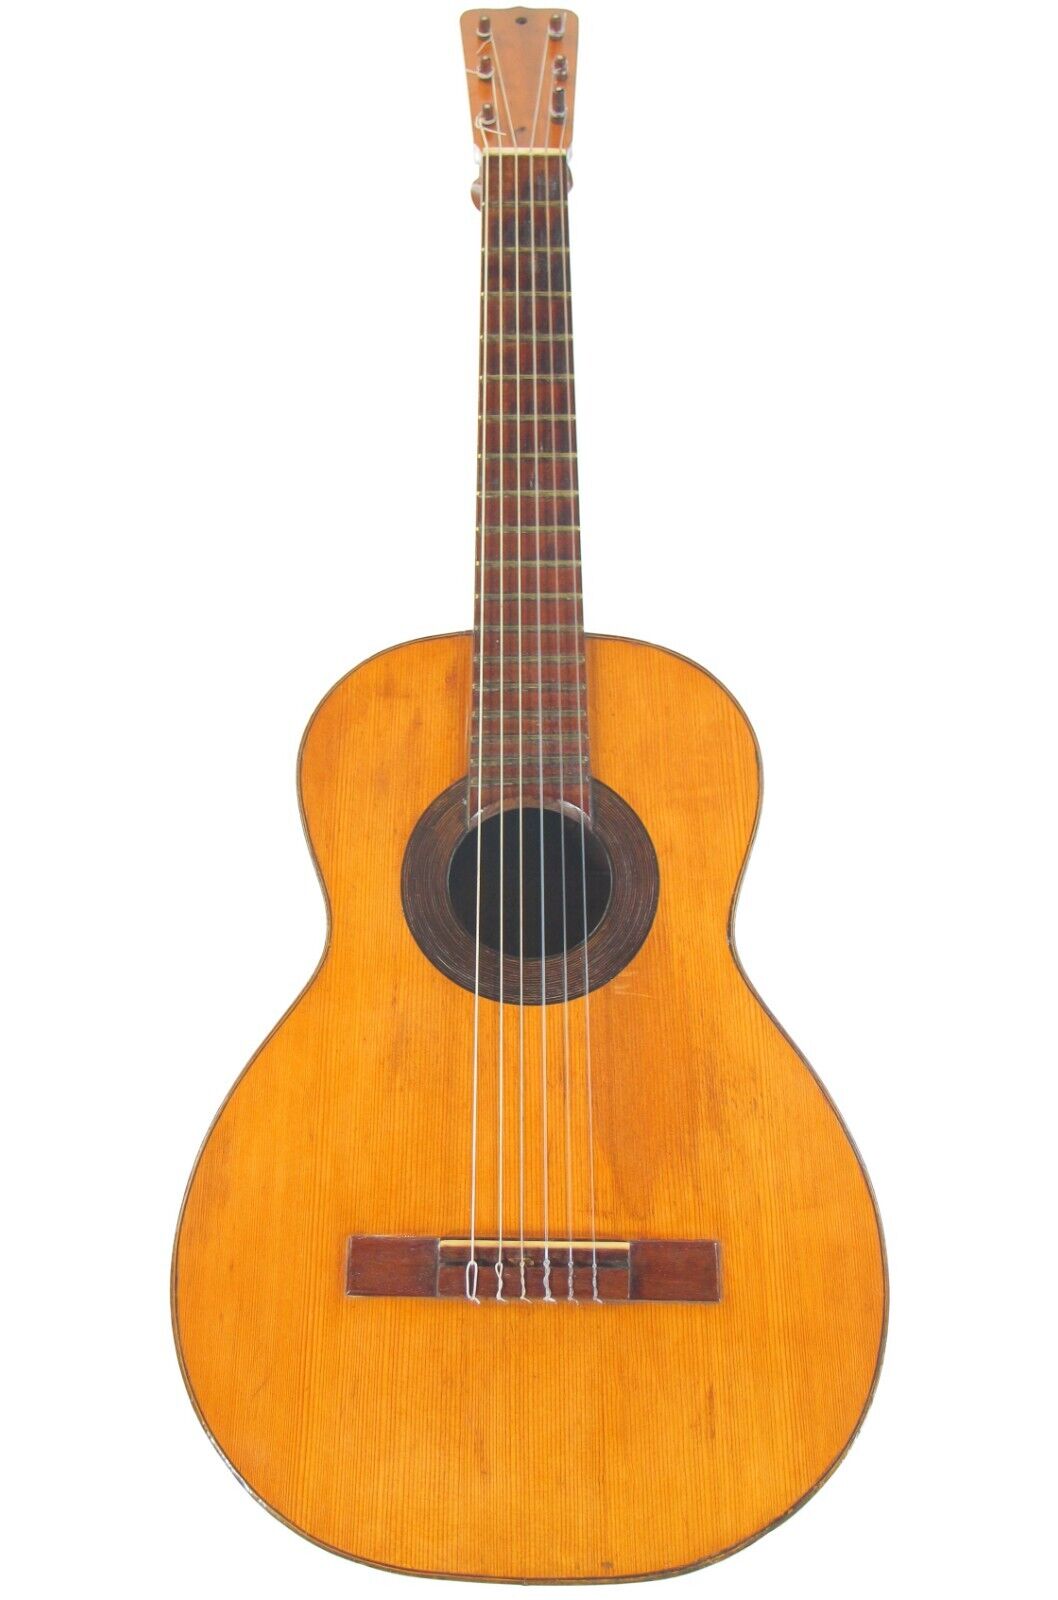 Jose Ramirez I 1895 - Torres style classical guitar -impressive piece of history